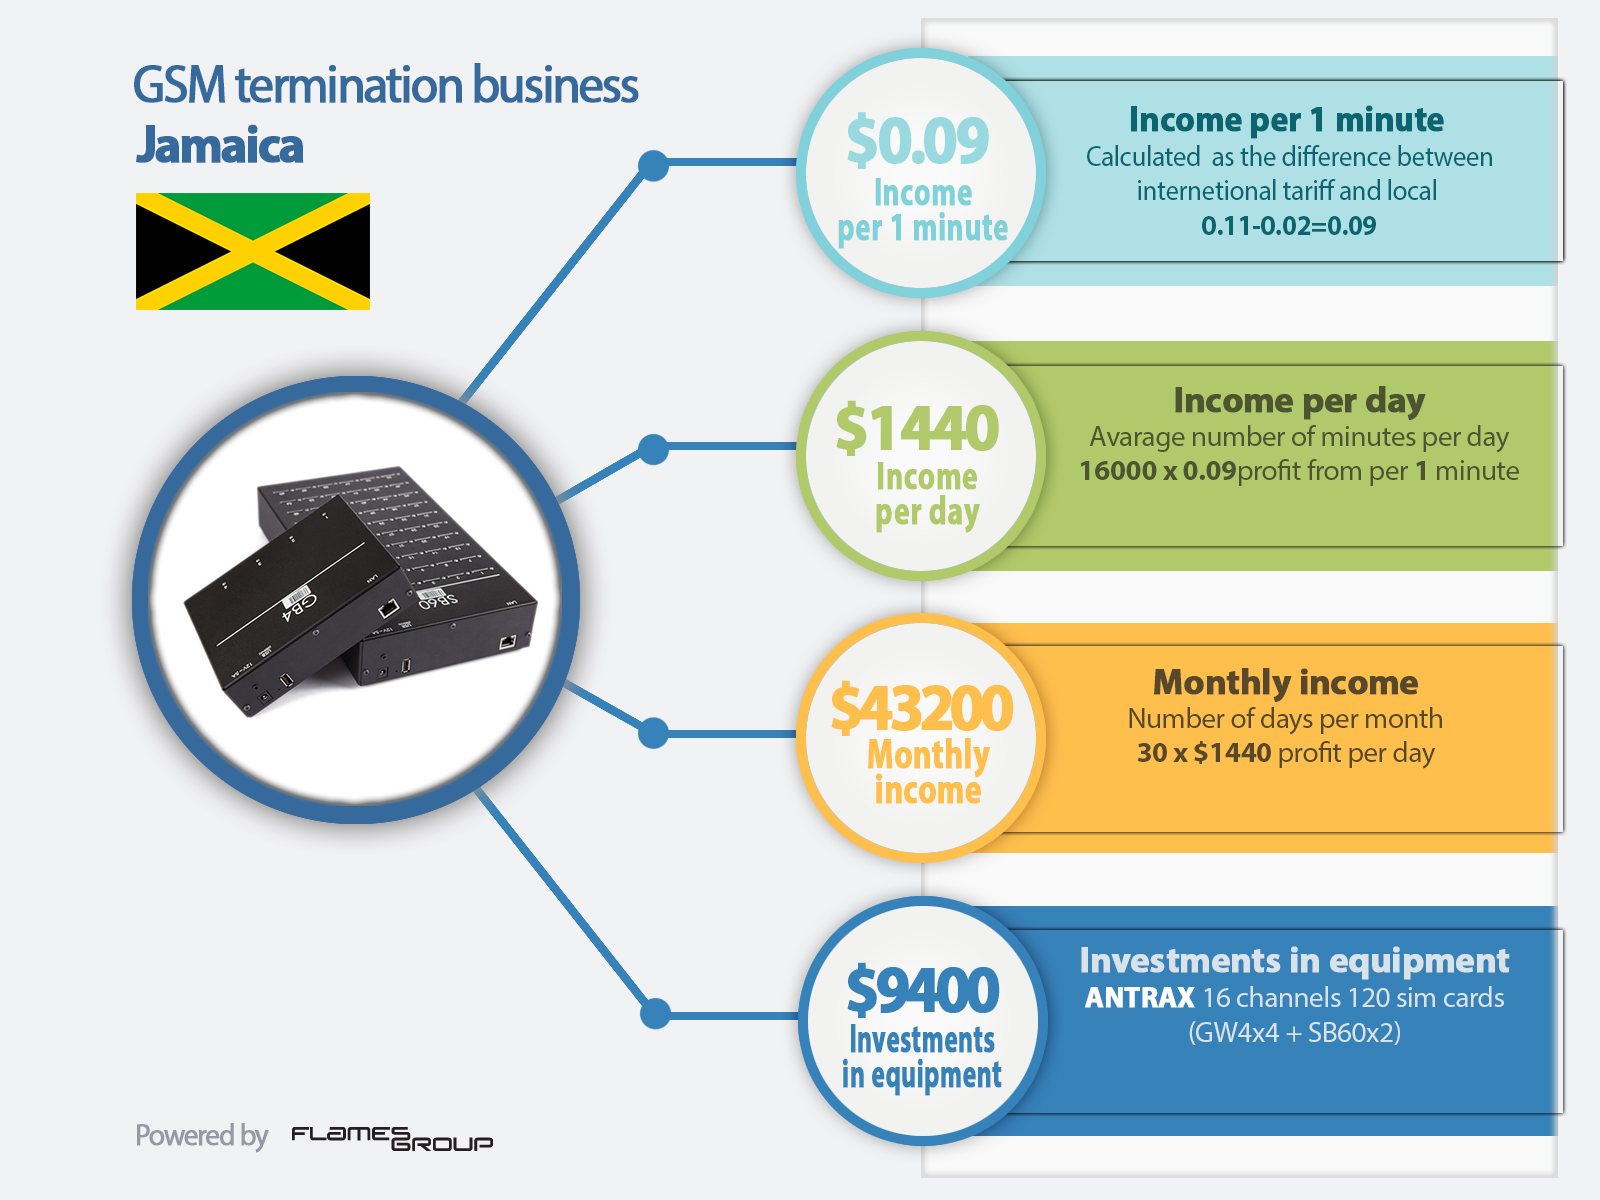 GSM termination in Jamaica - Infographic ANTRAX